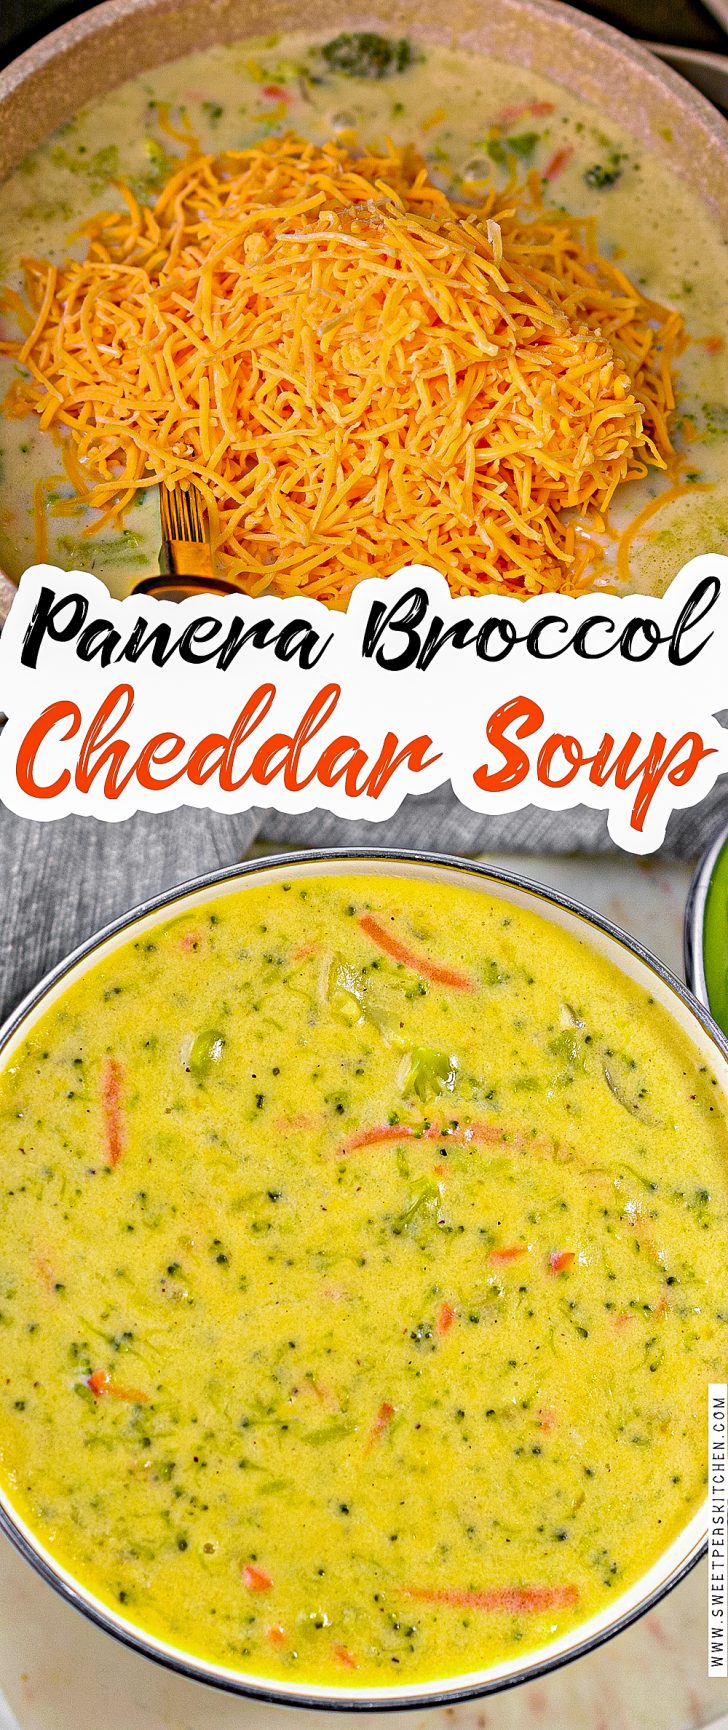 Panera Broccoli Cheddar Soup recipe on Pinterest